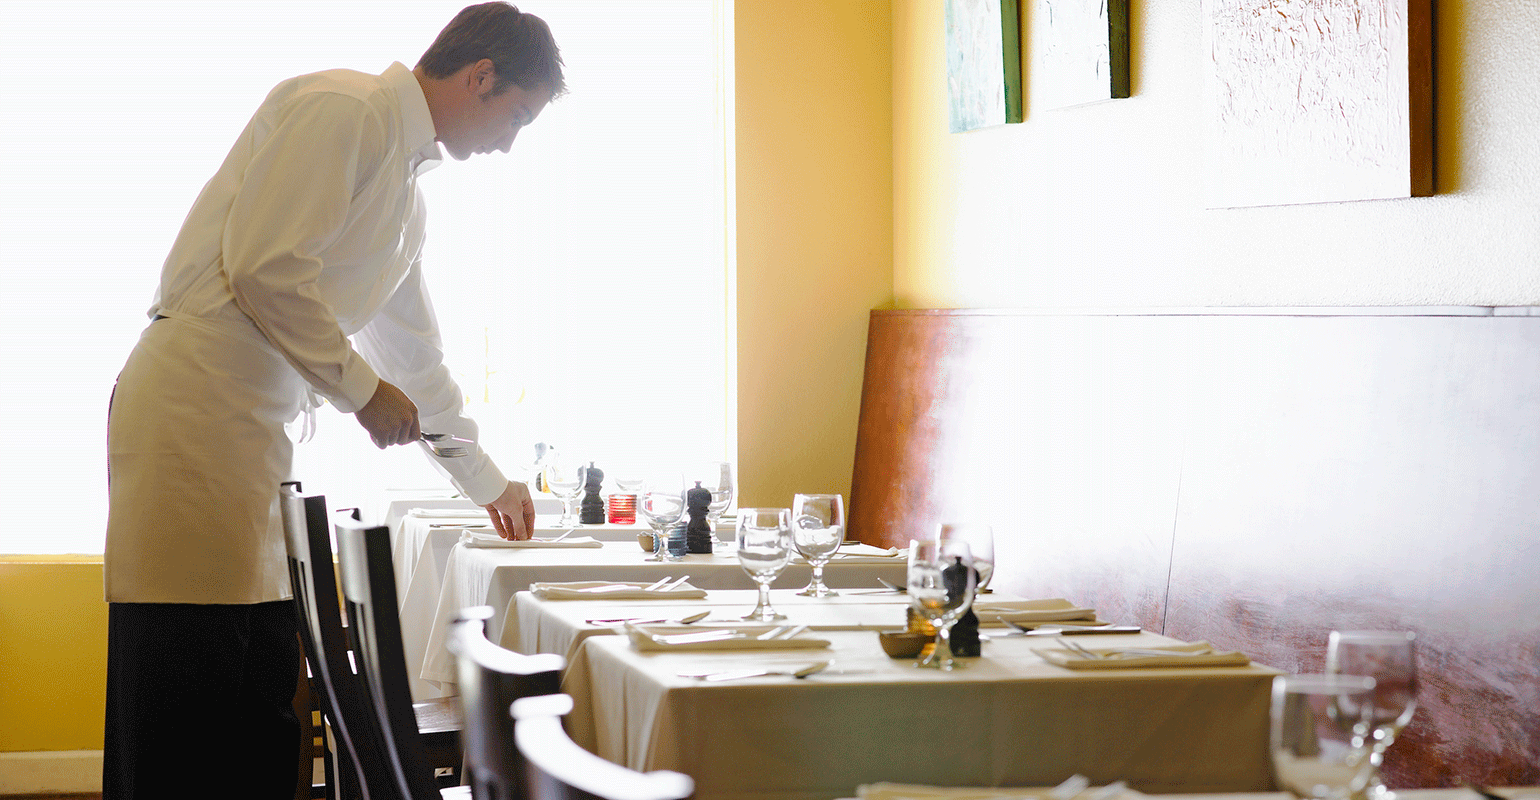 Restaurants see weakest quarter in years in 1Q